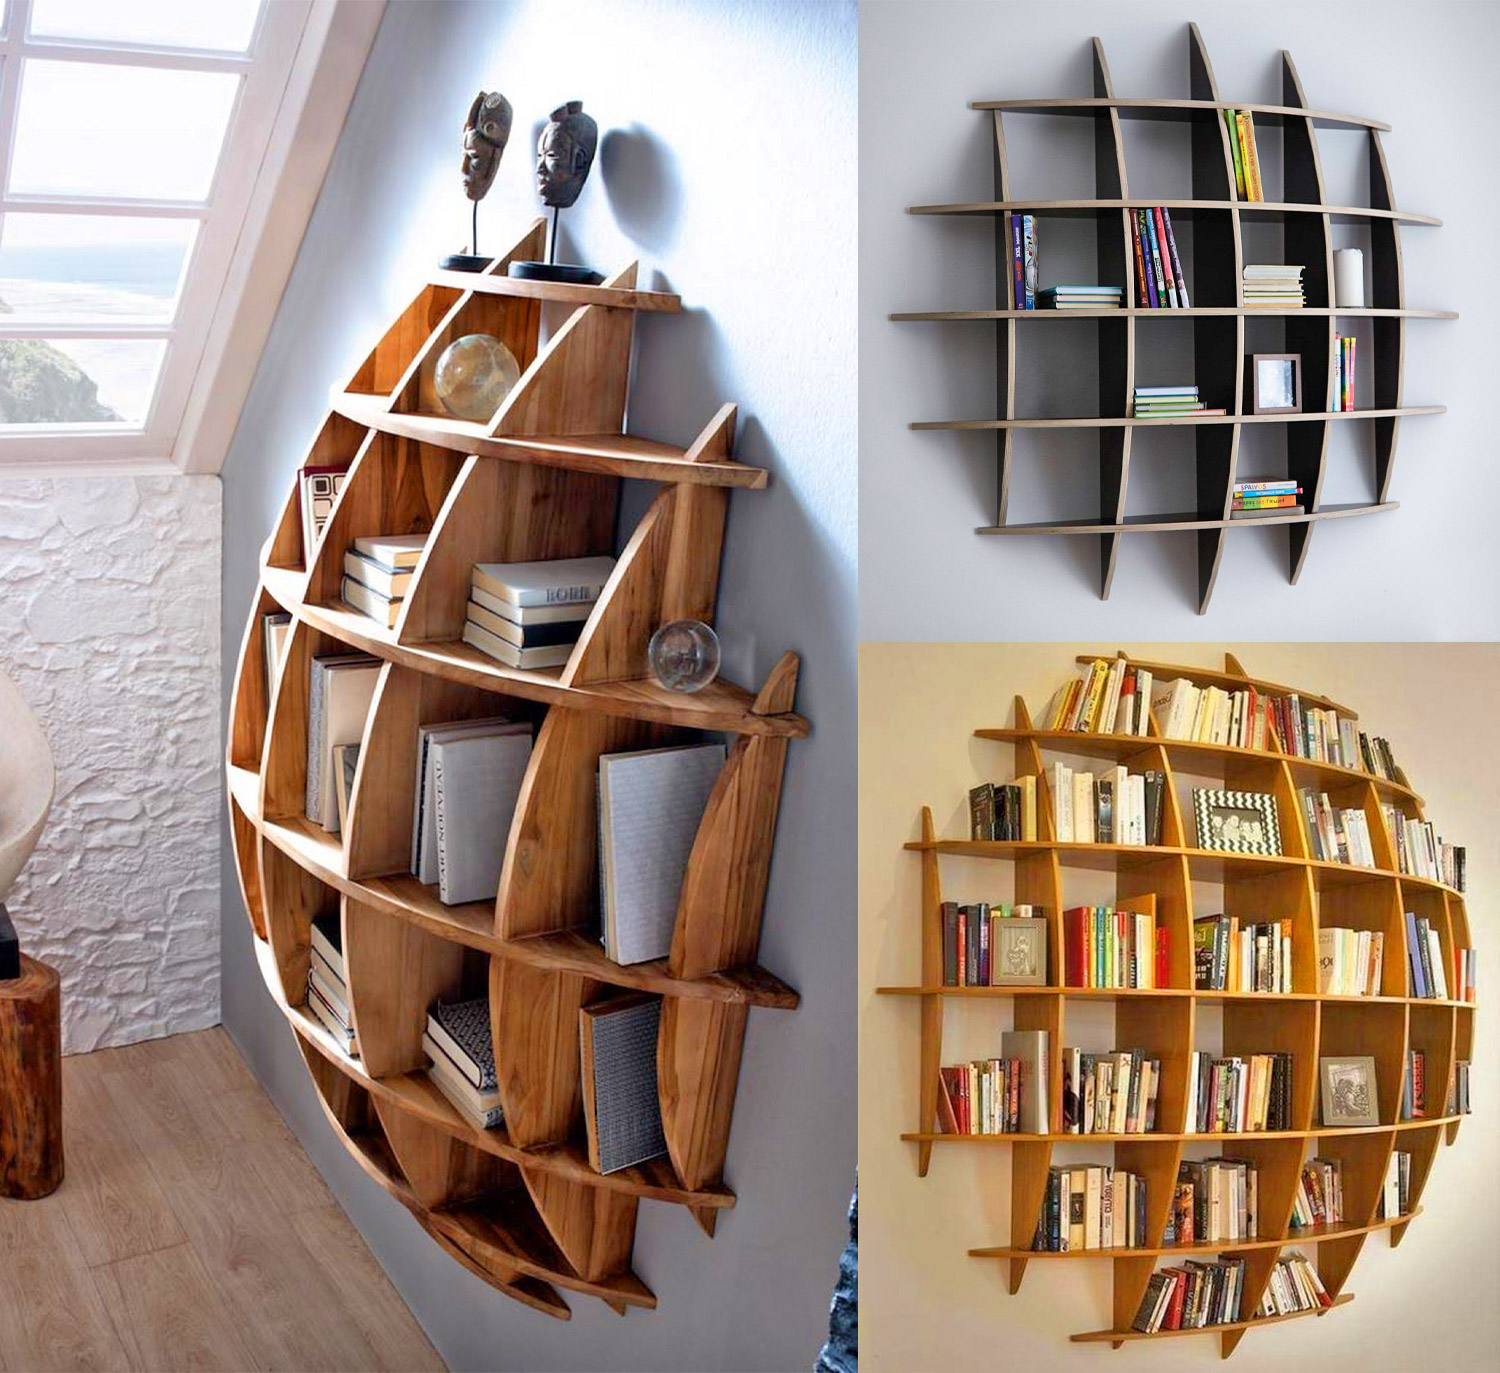 3D Sphere Disappearing Wall Bookshelf